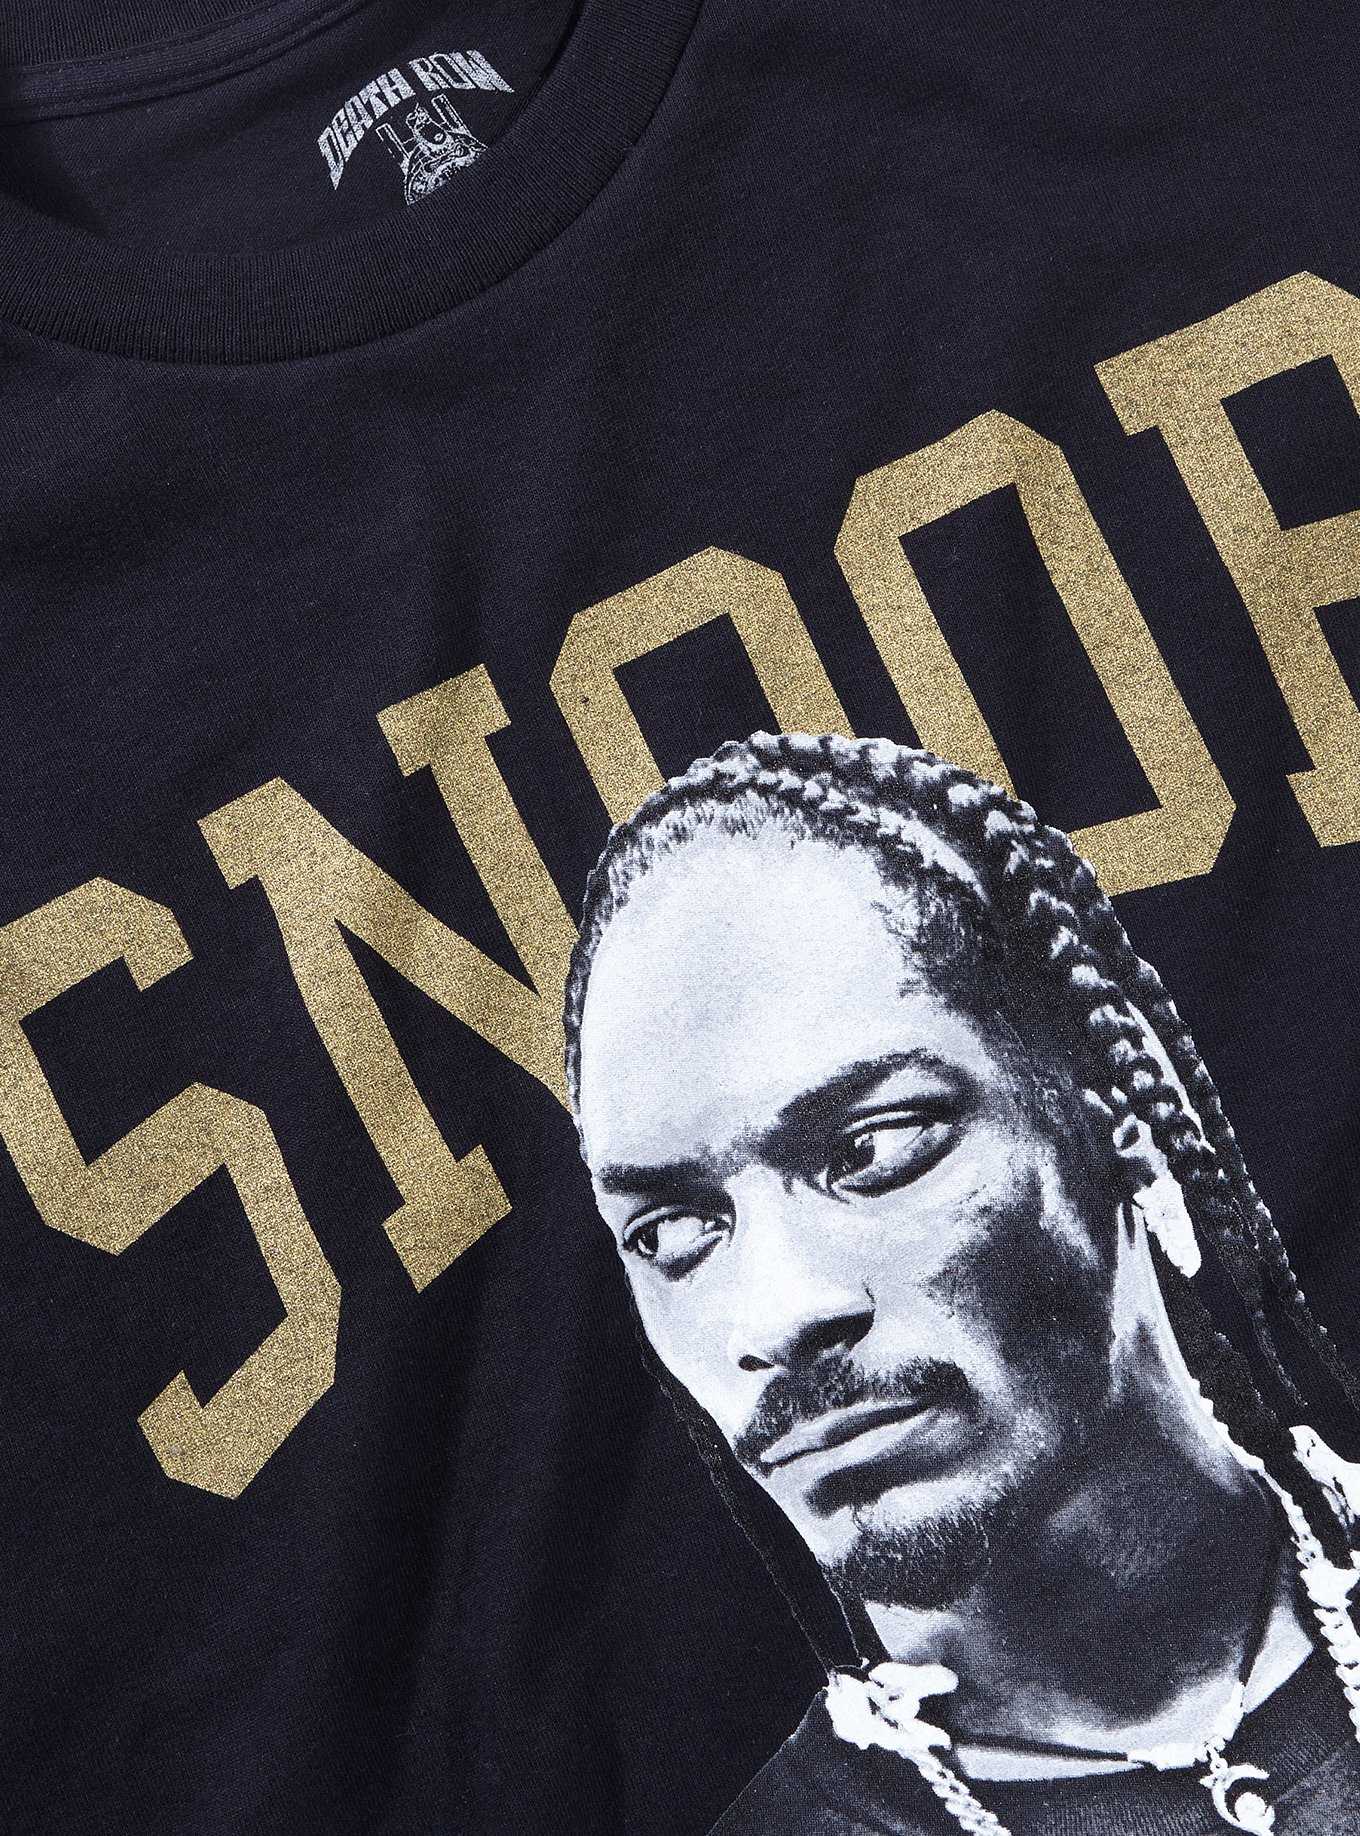 Snoop Dogg Portrait Gold Lettering Boyfriend Fit Girls T-Shirt, , hi-res